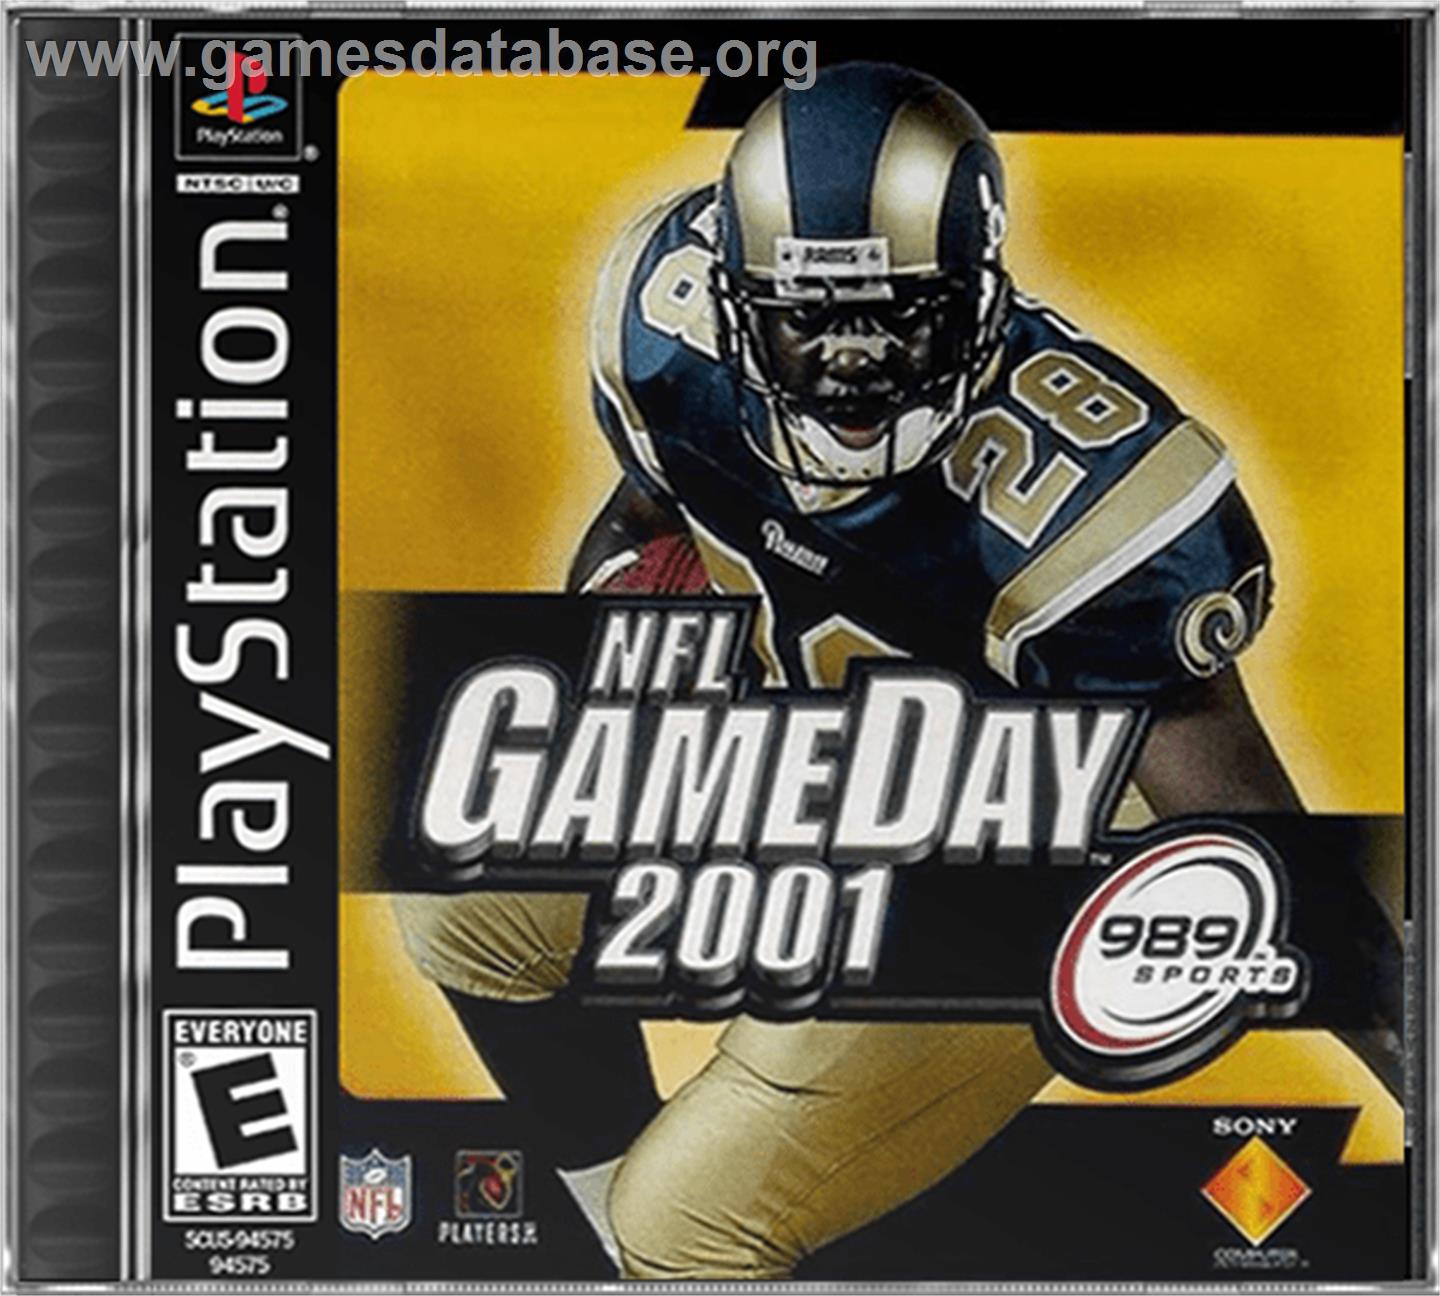 NFL GameDay 2001 - Sony Playstation - Artwork - Box